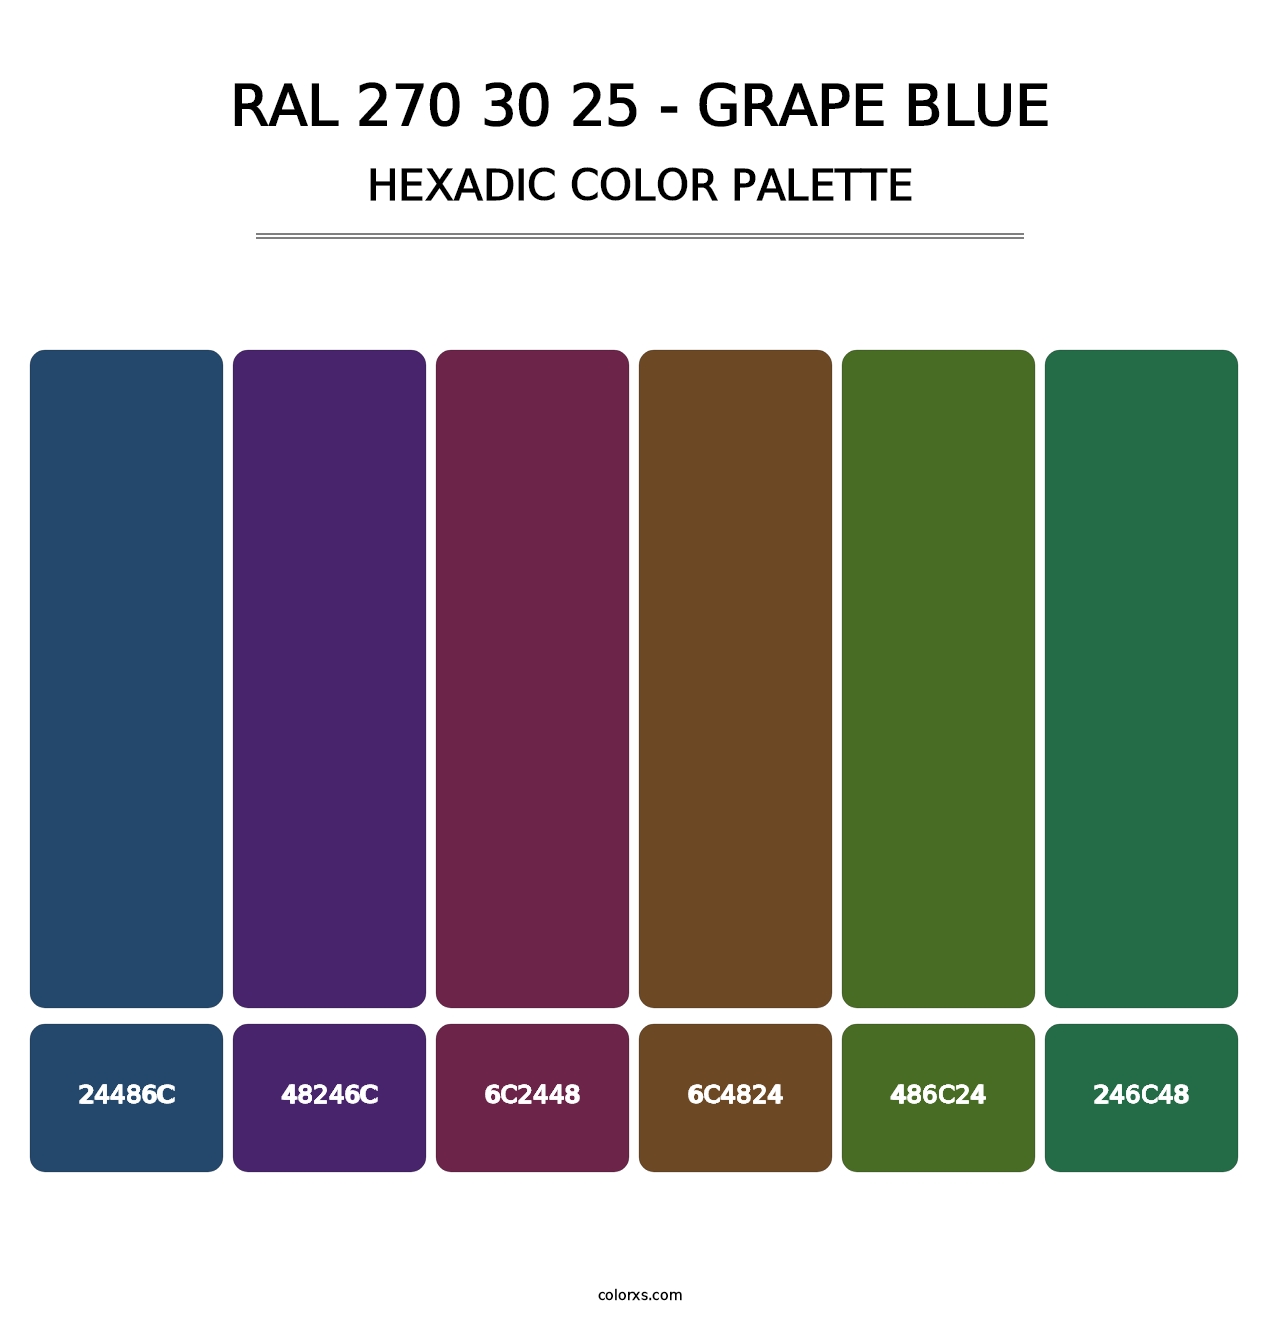 RAL 270 30 25 - Grape Blue - Hexadic Color Palette